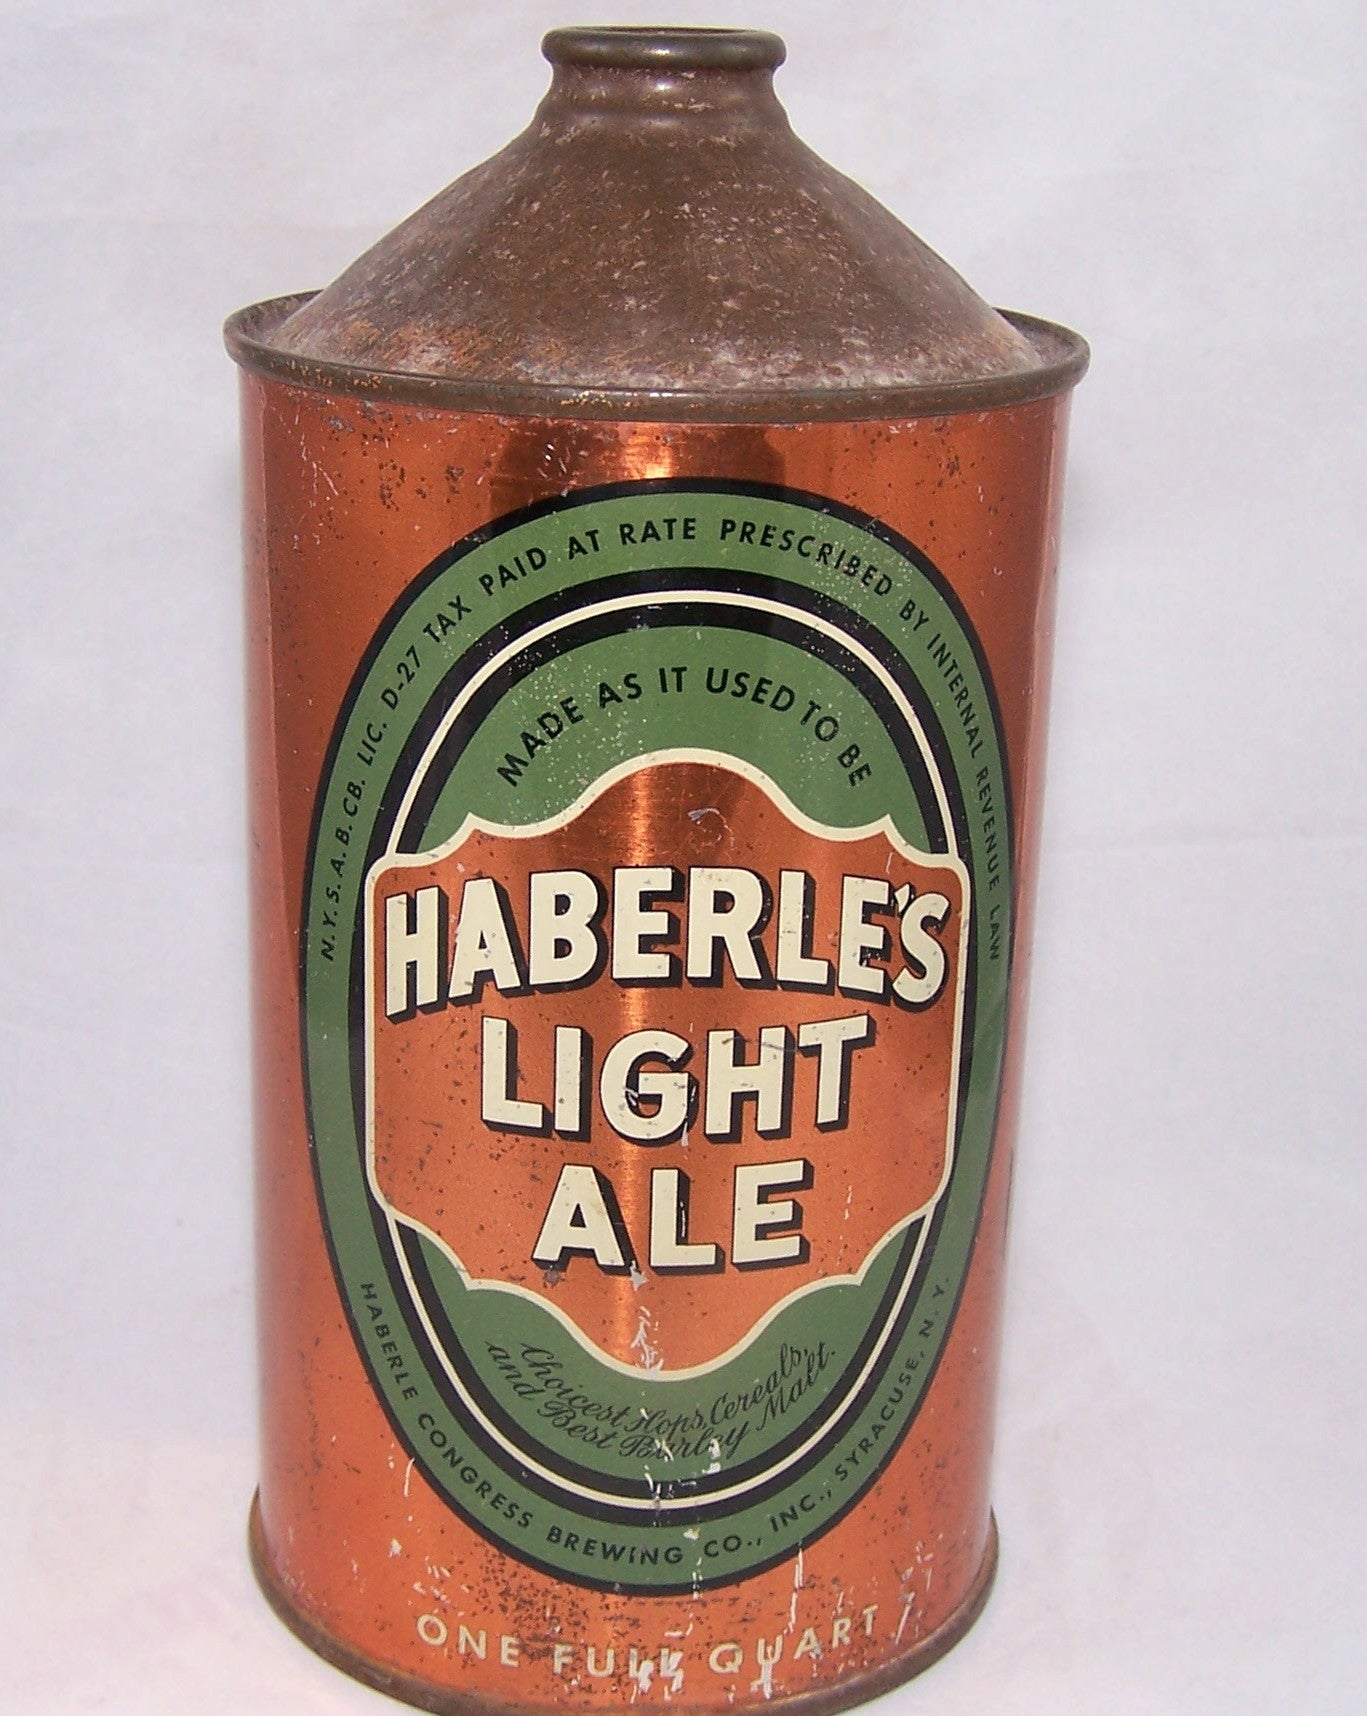 Haberle's Light Ale, USBC 211-12, Grade 1- Sold on 05/24/16